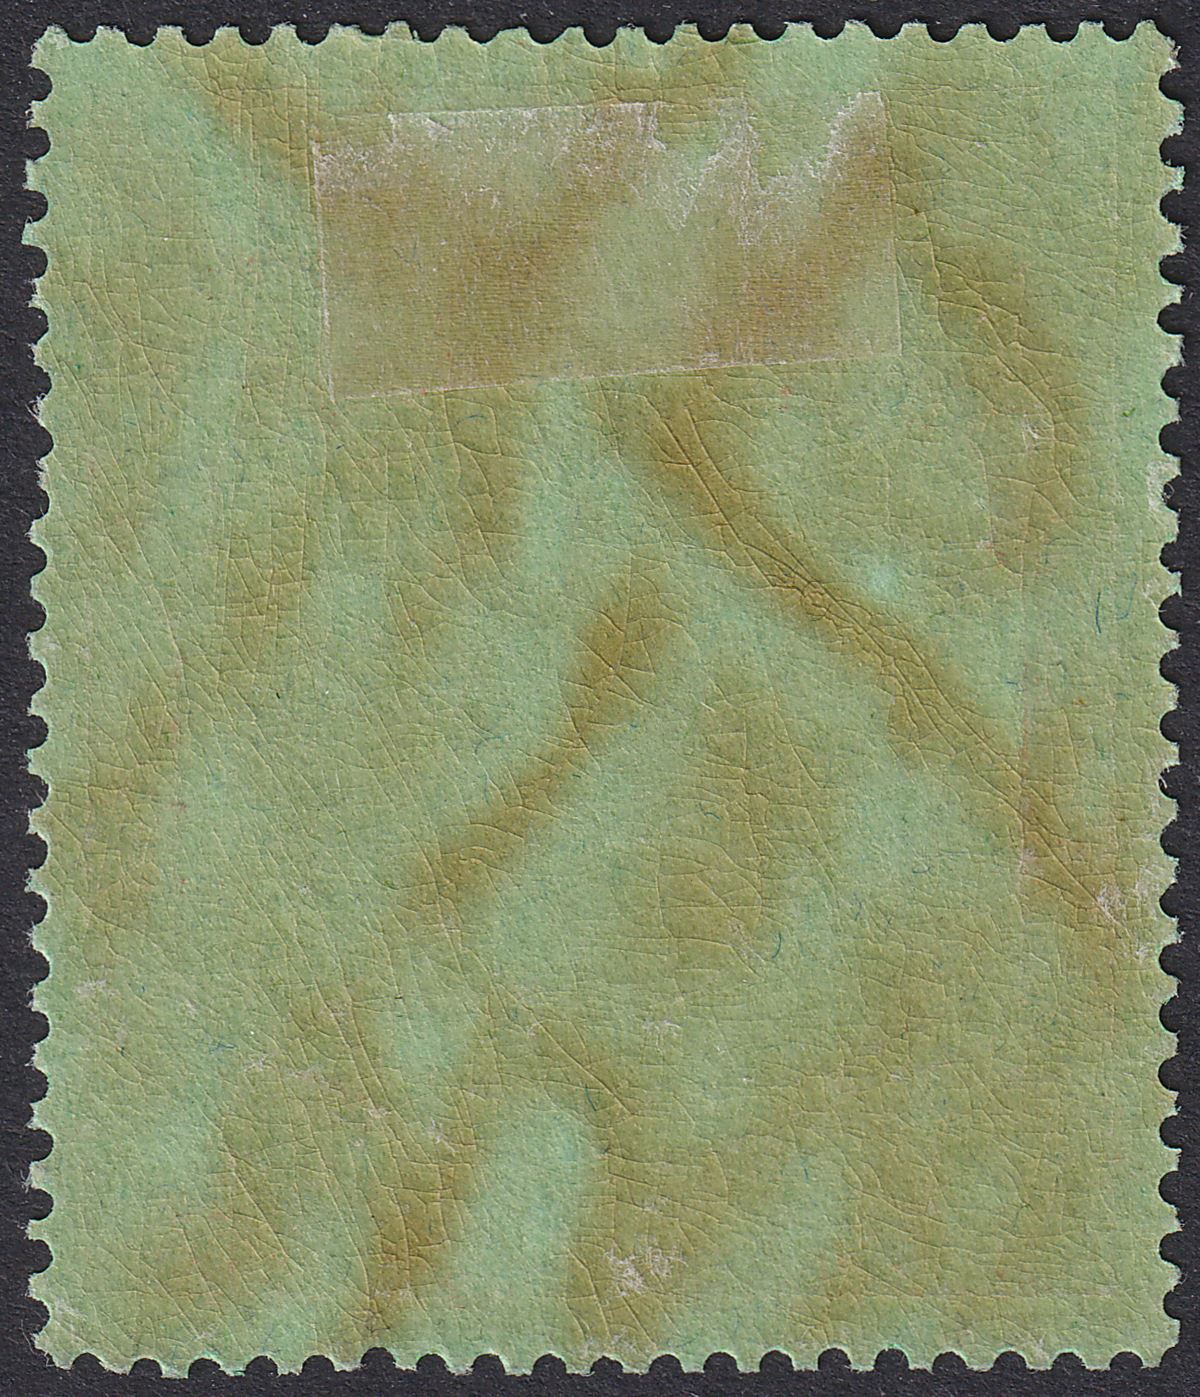 Bermuda 1938 KGVI 10sh Green and Deep Lake on Pale Emerald p14 Mint SG119